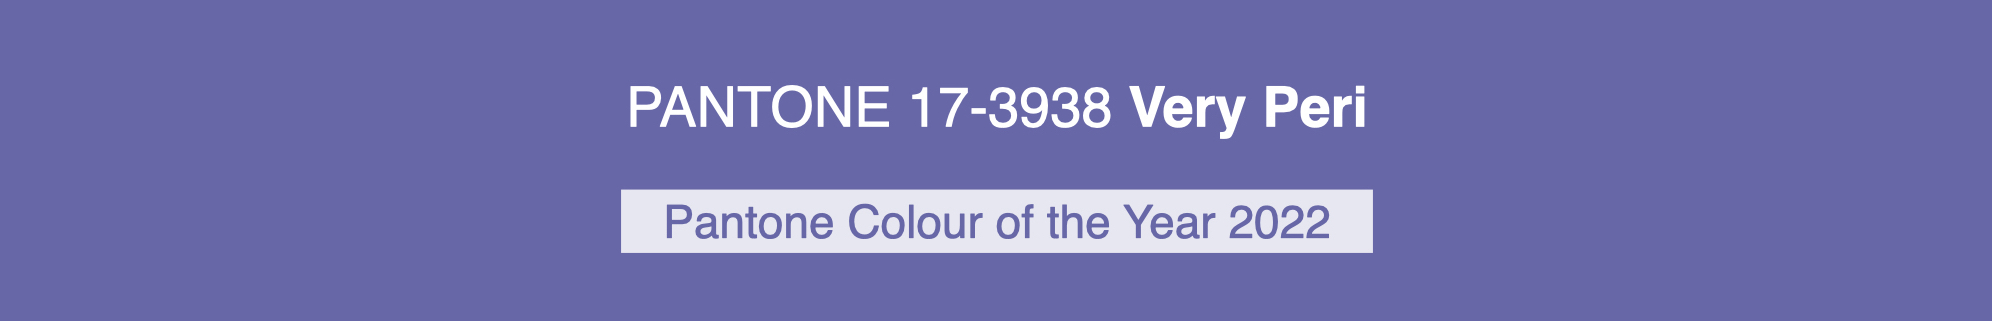 Pantone Colour 2022 Very Peri